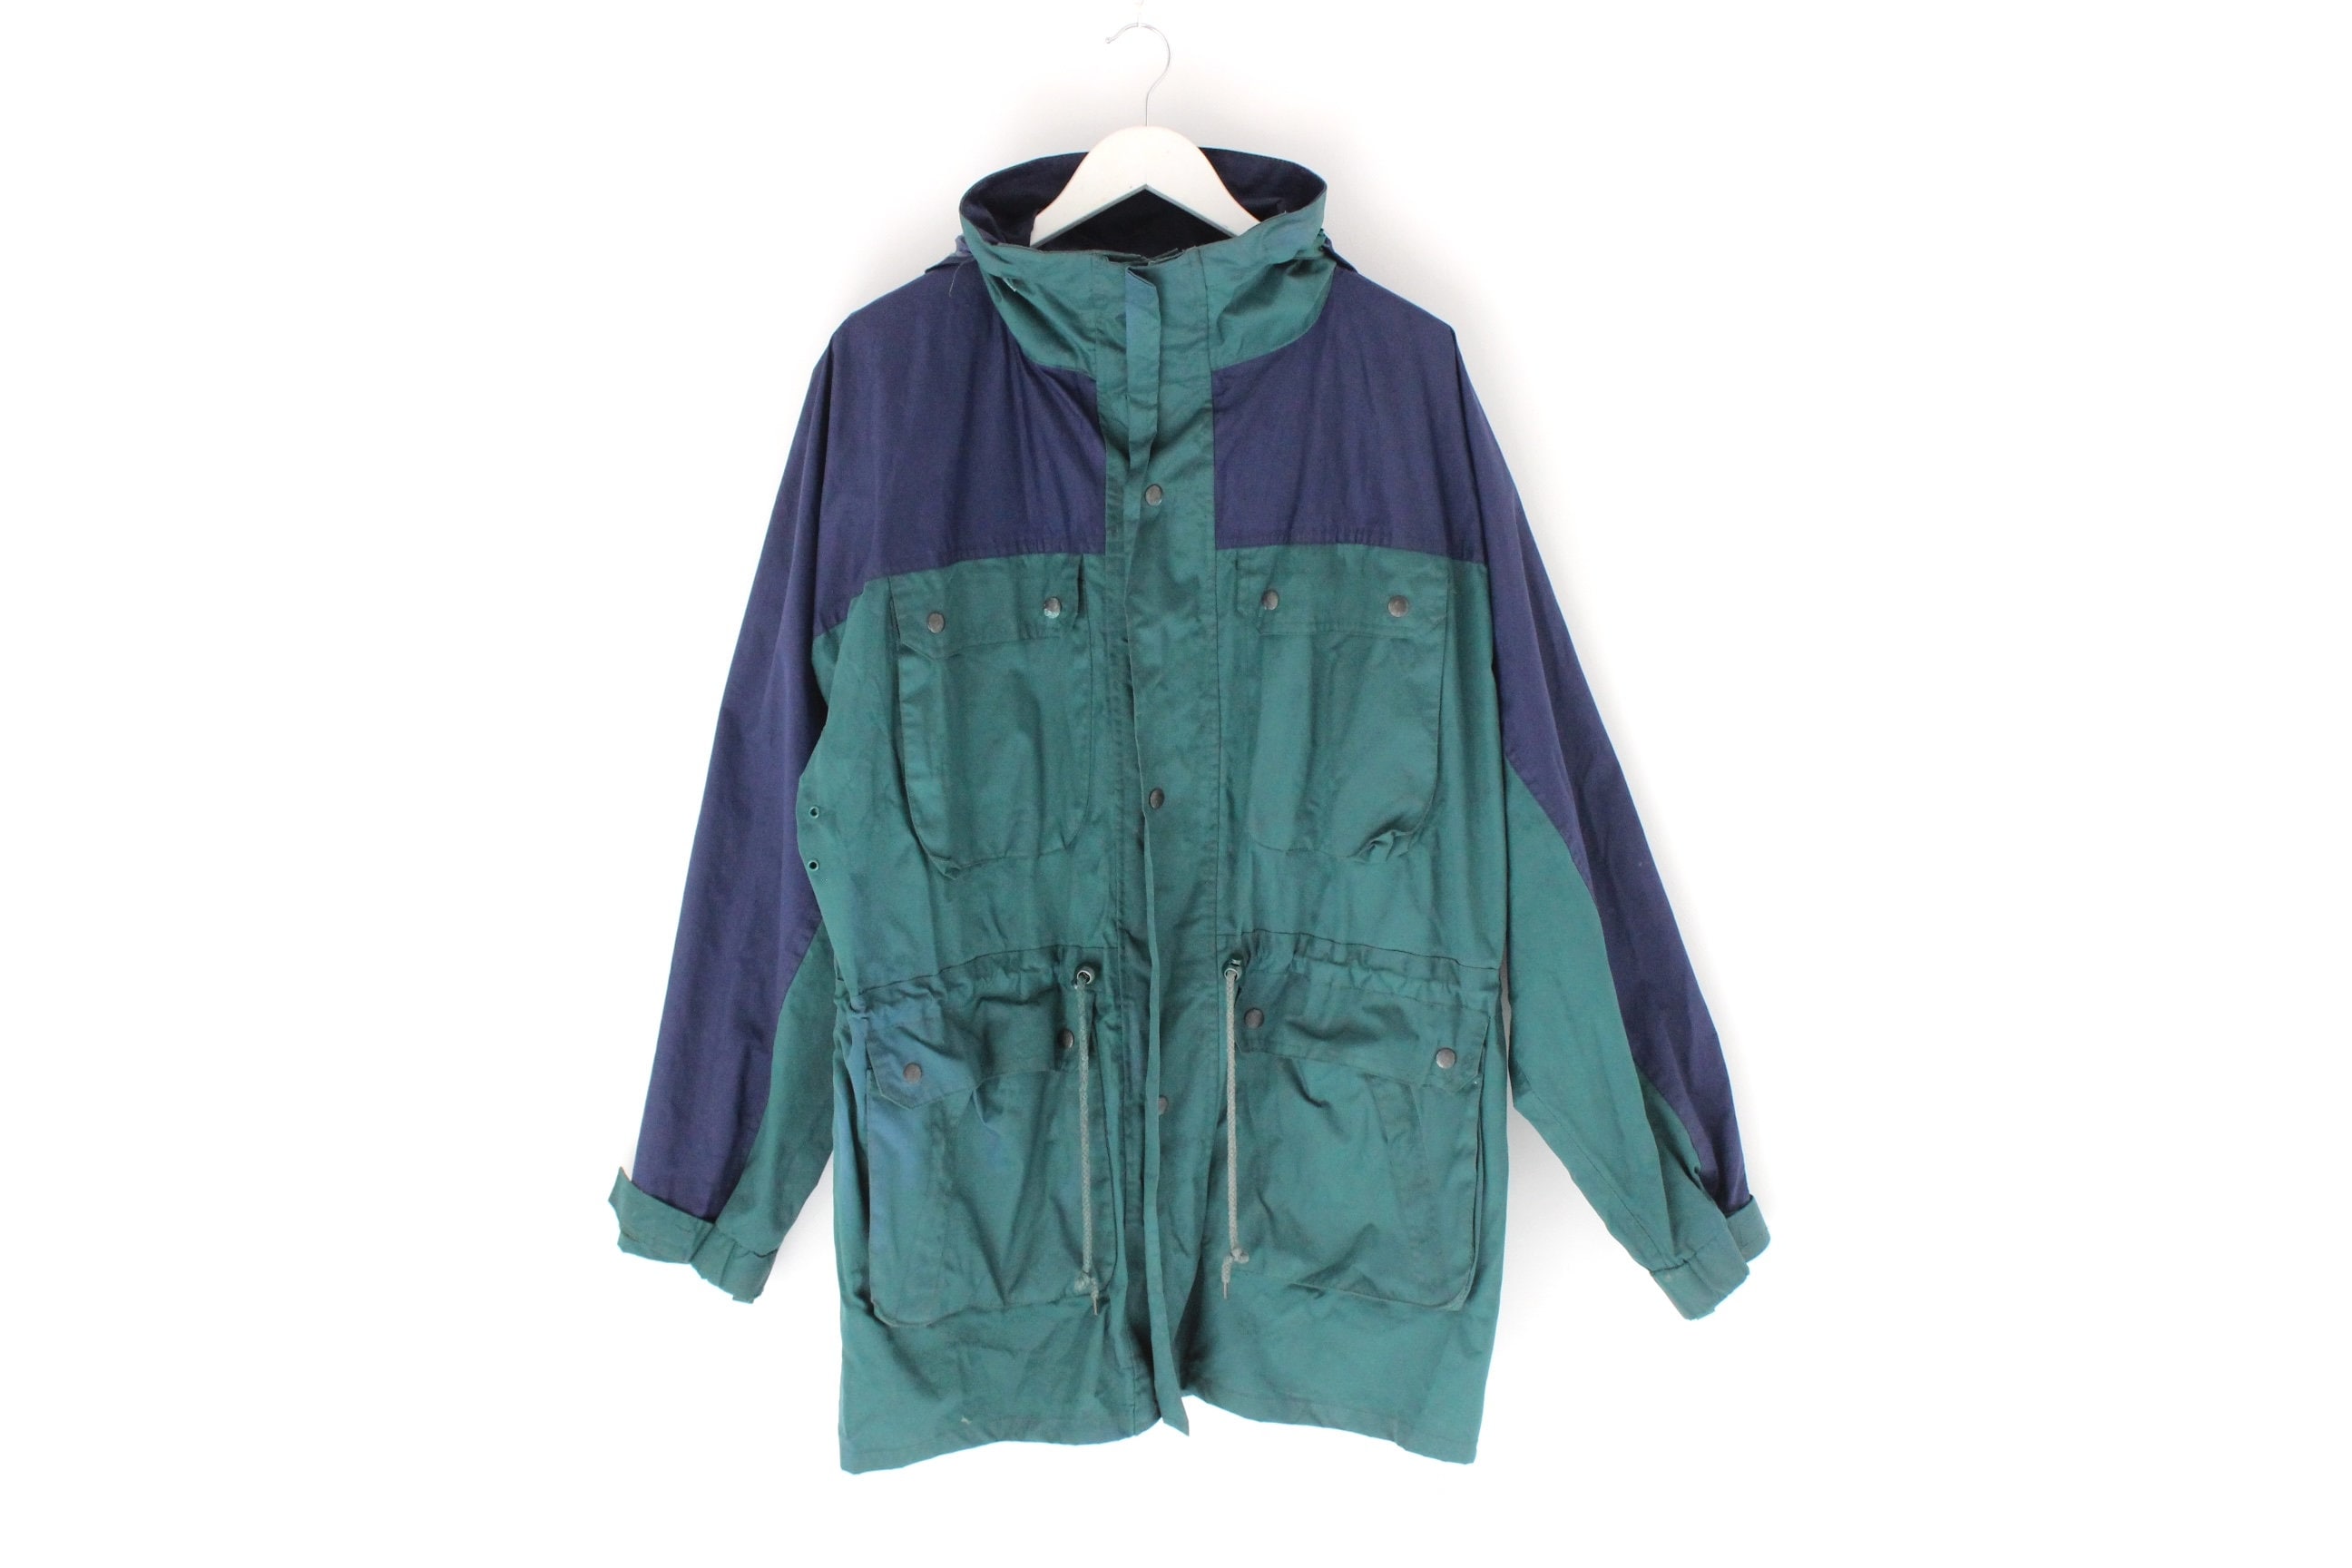 Vintage 1980s Yellow Fishing Rain Jacket Coat Rubber Heavy Duty International Sportswear Made in USA Newport Maine